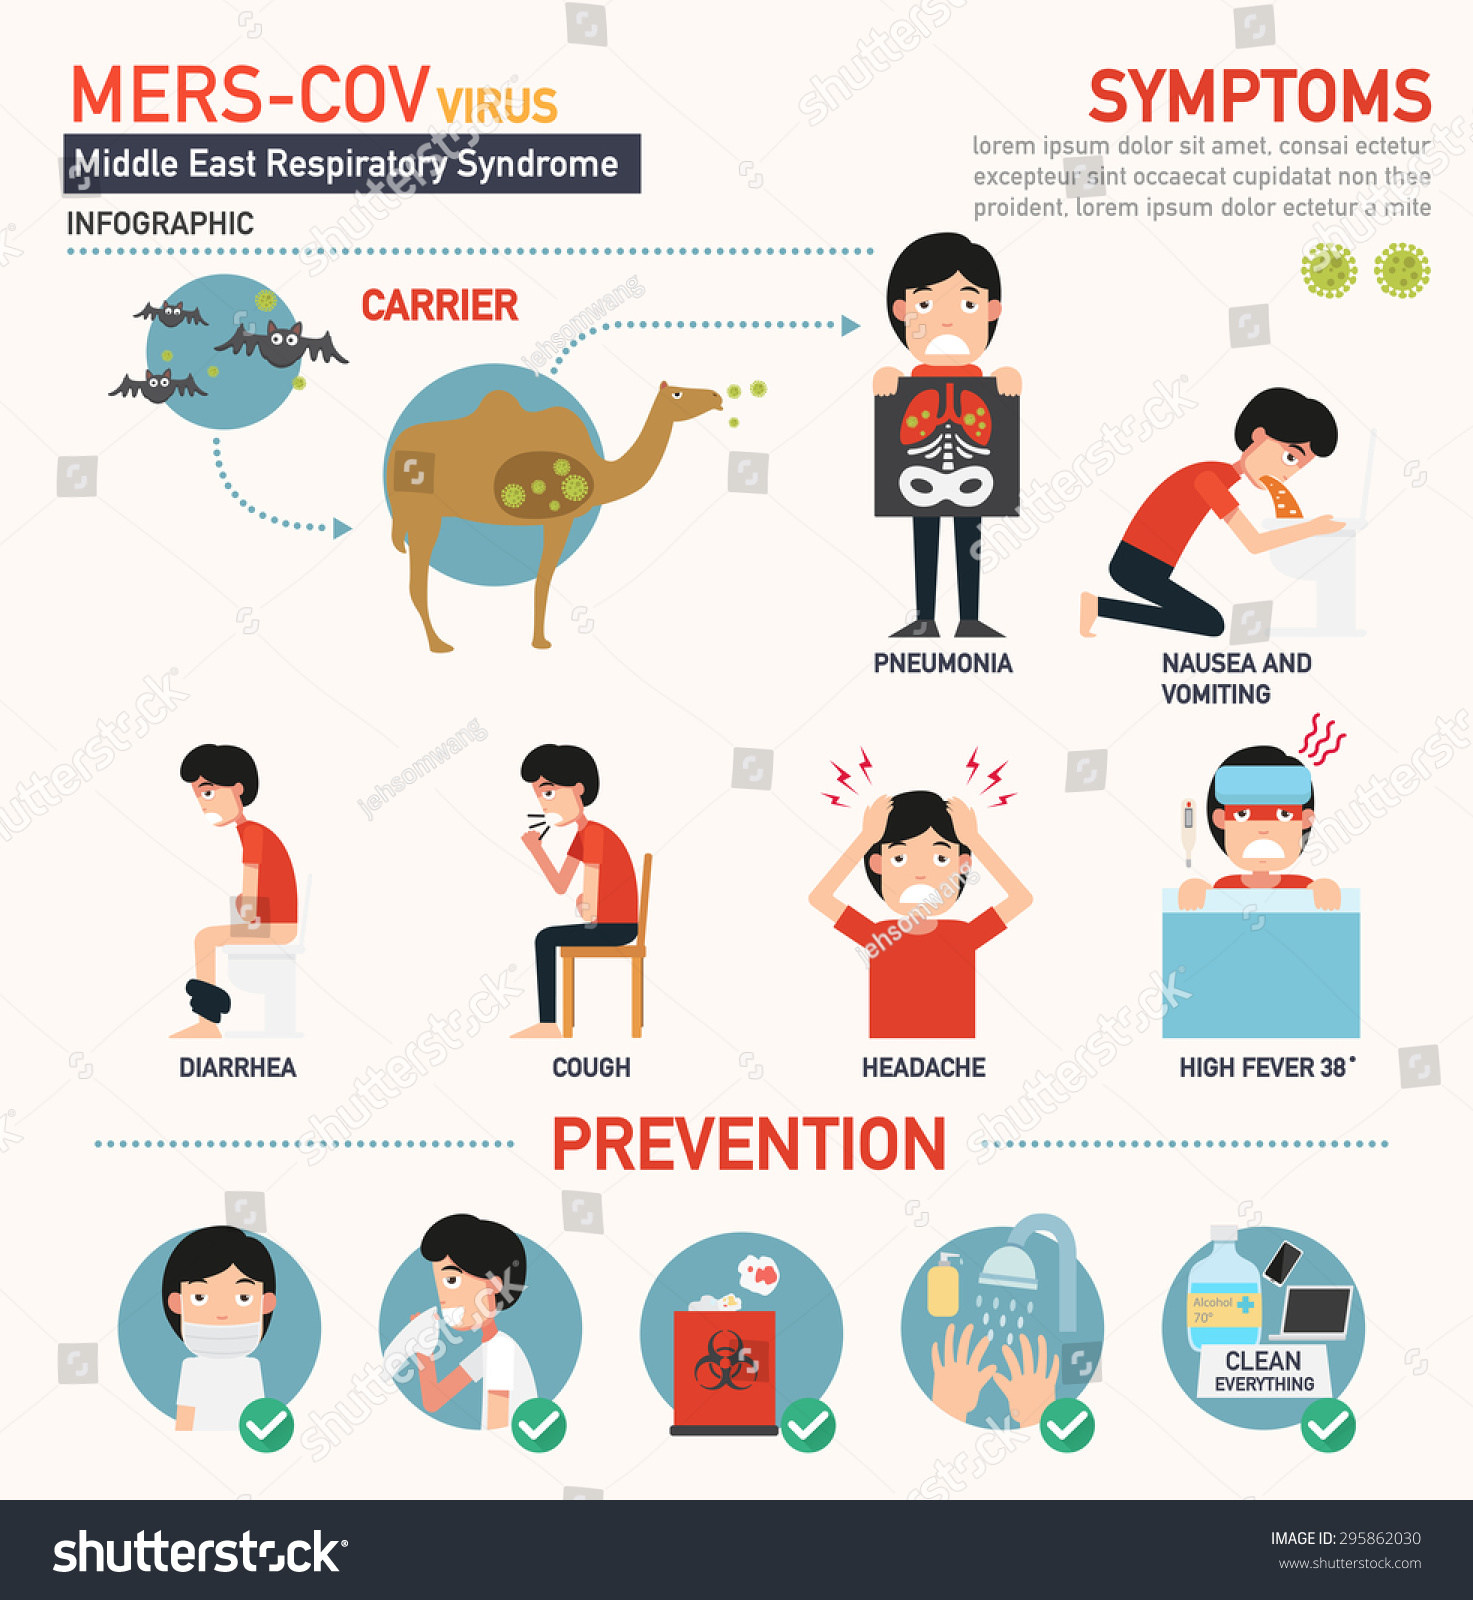 Merscov Middle East Respiratory Syndrome Coronavirus Stock Vector 295862030 - Shutterstock1473 x 1600